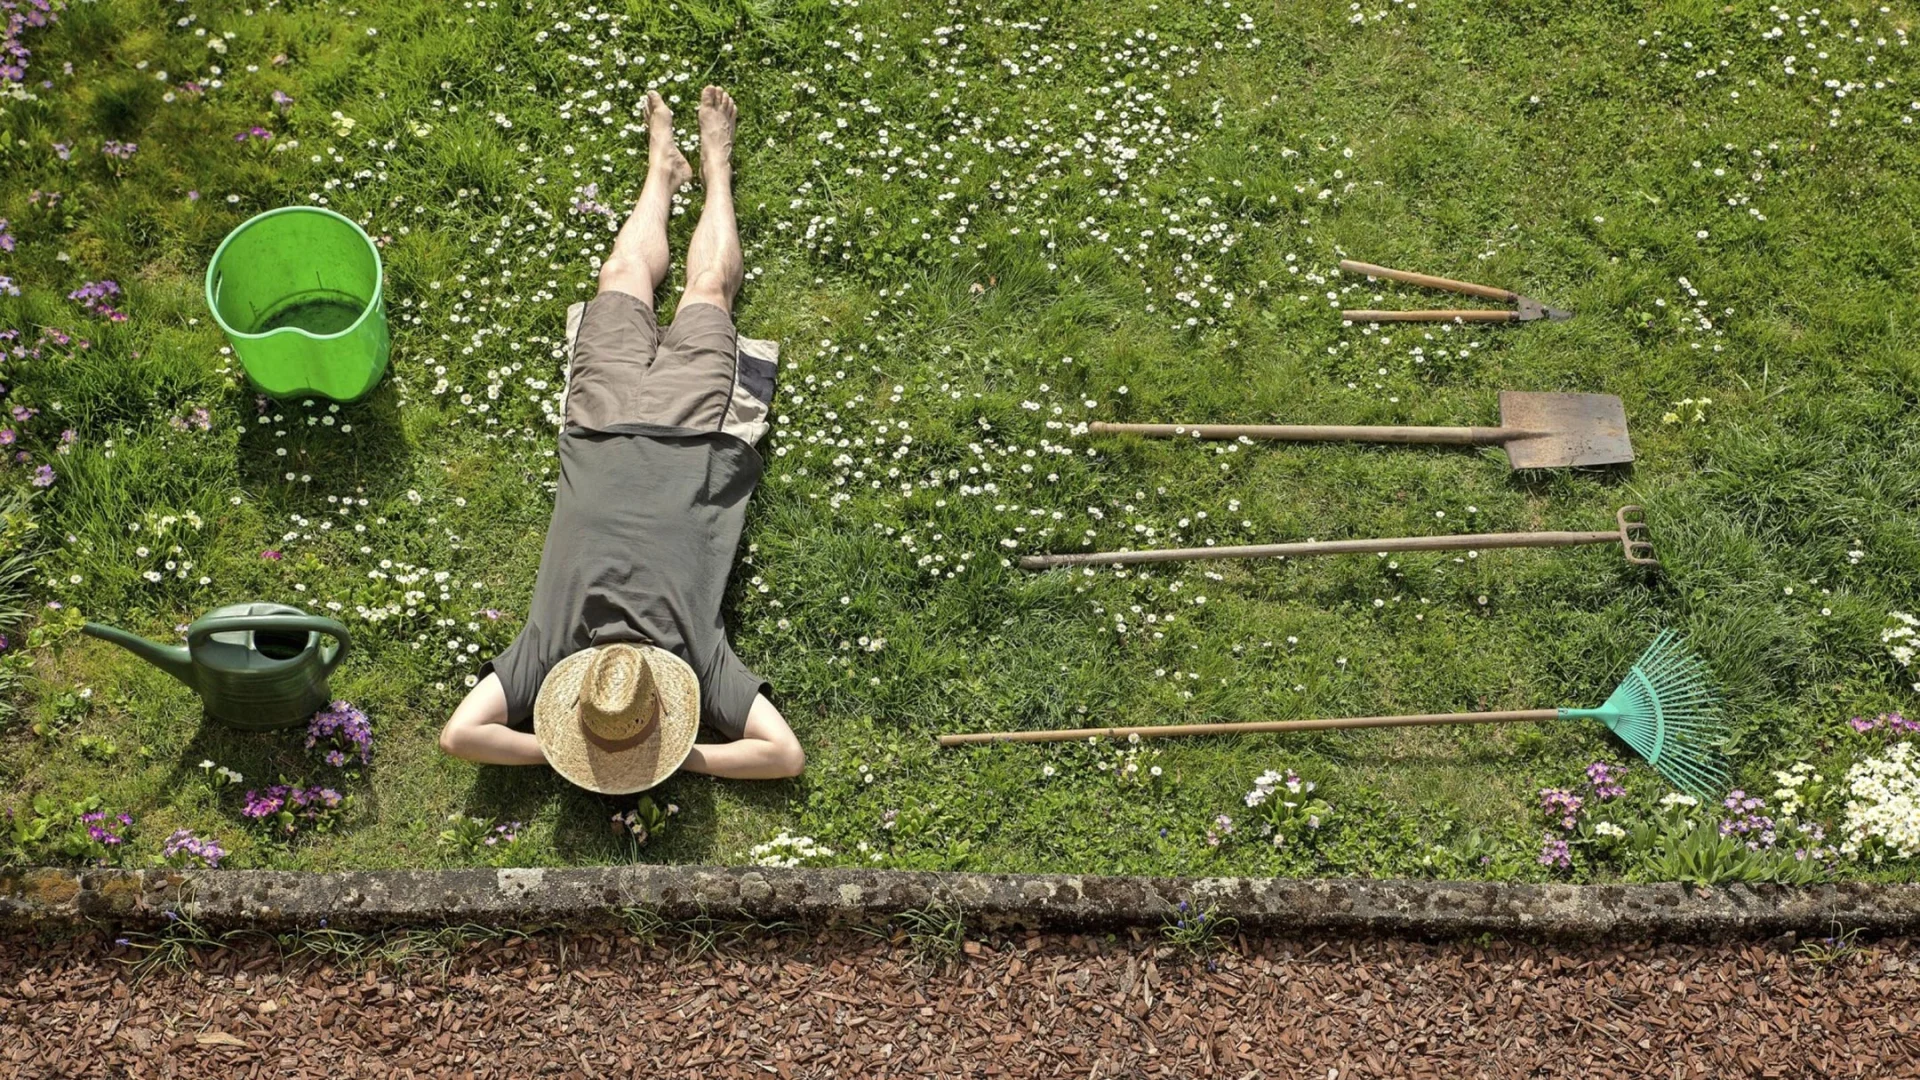 A man lying on the lawn, taking a break from gardening